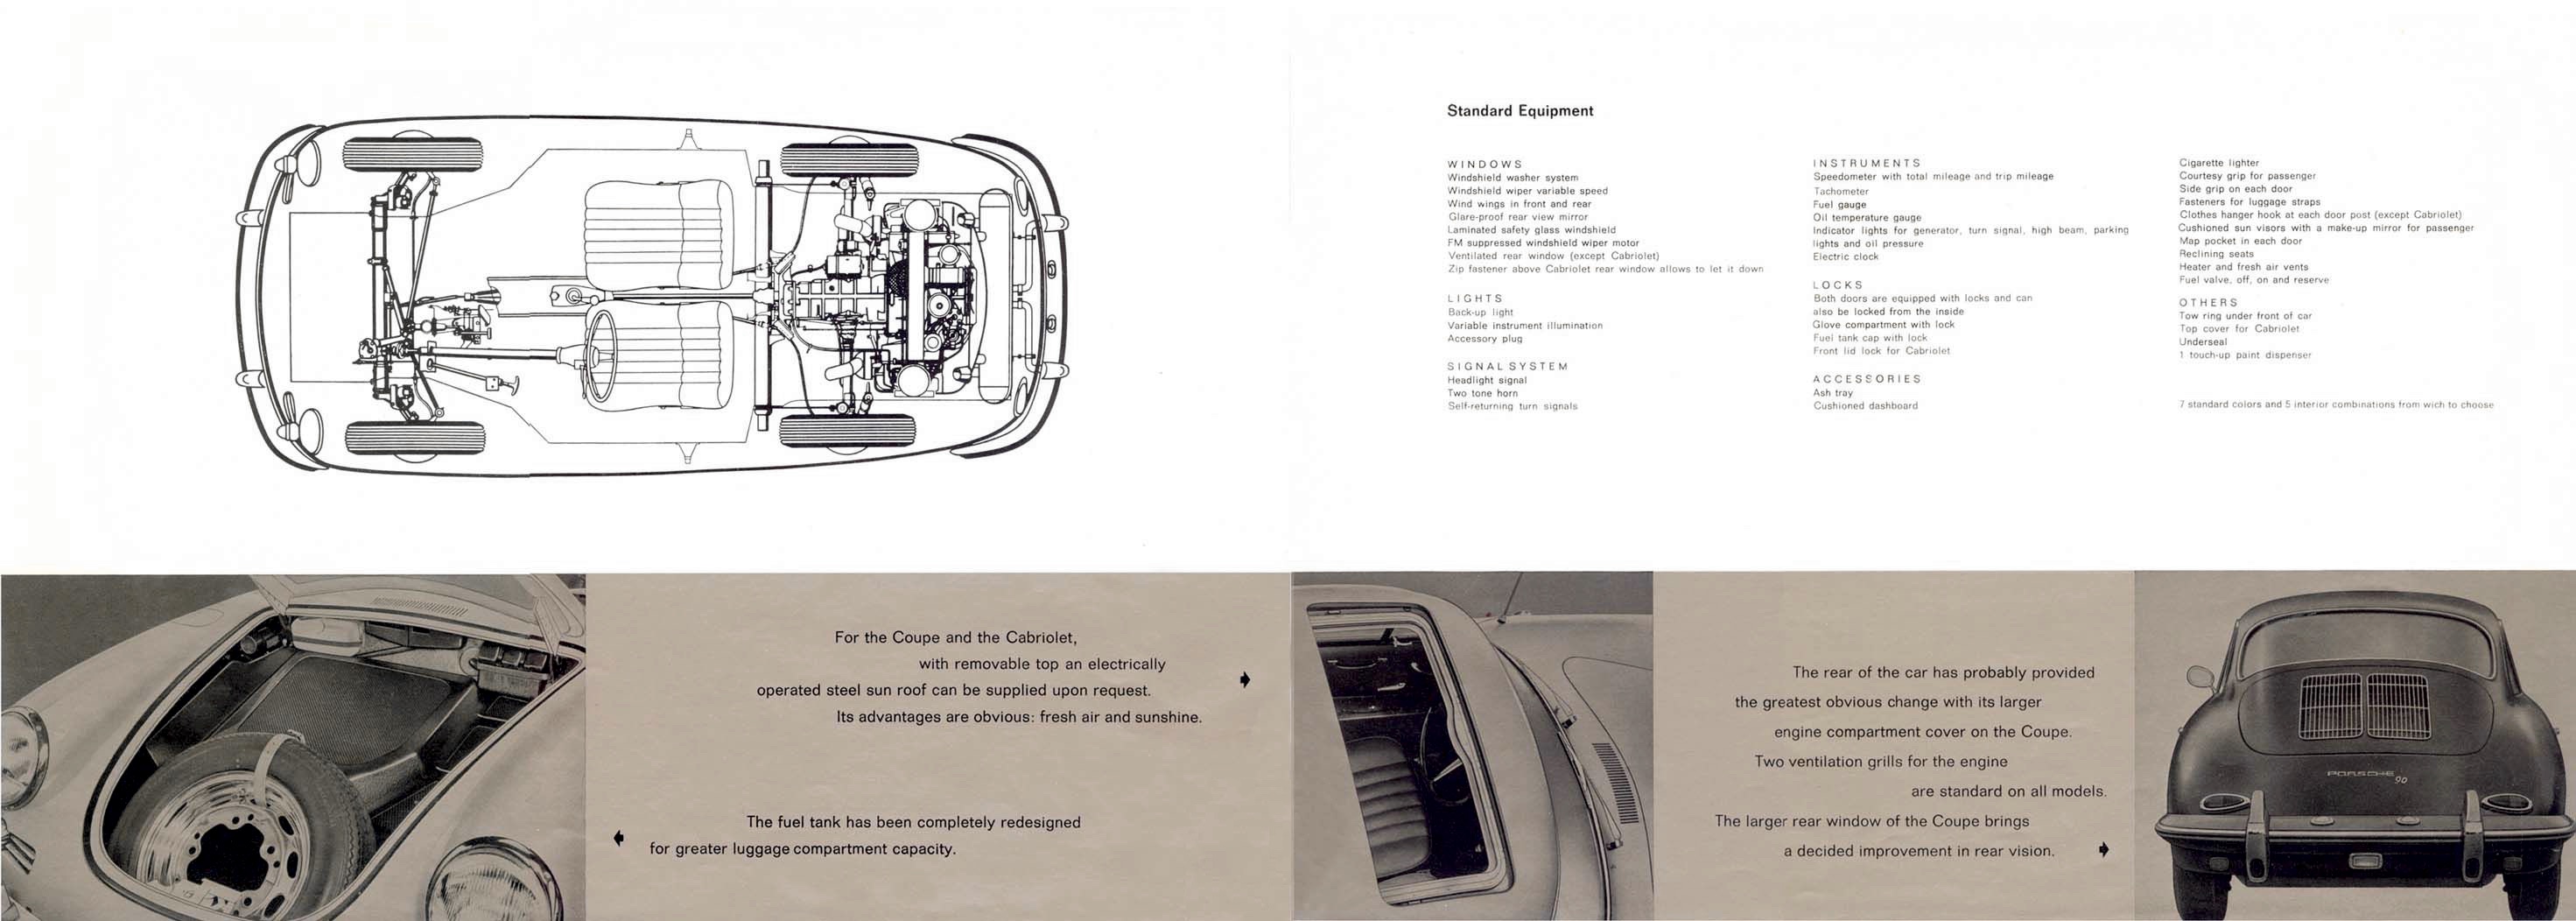 1962 Porsche 356B Brochure Page 3